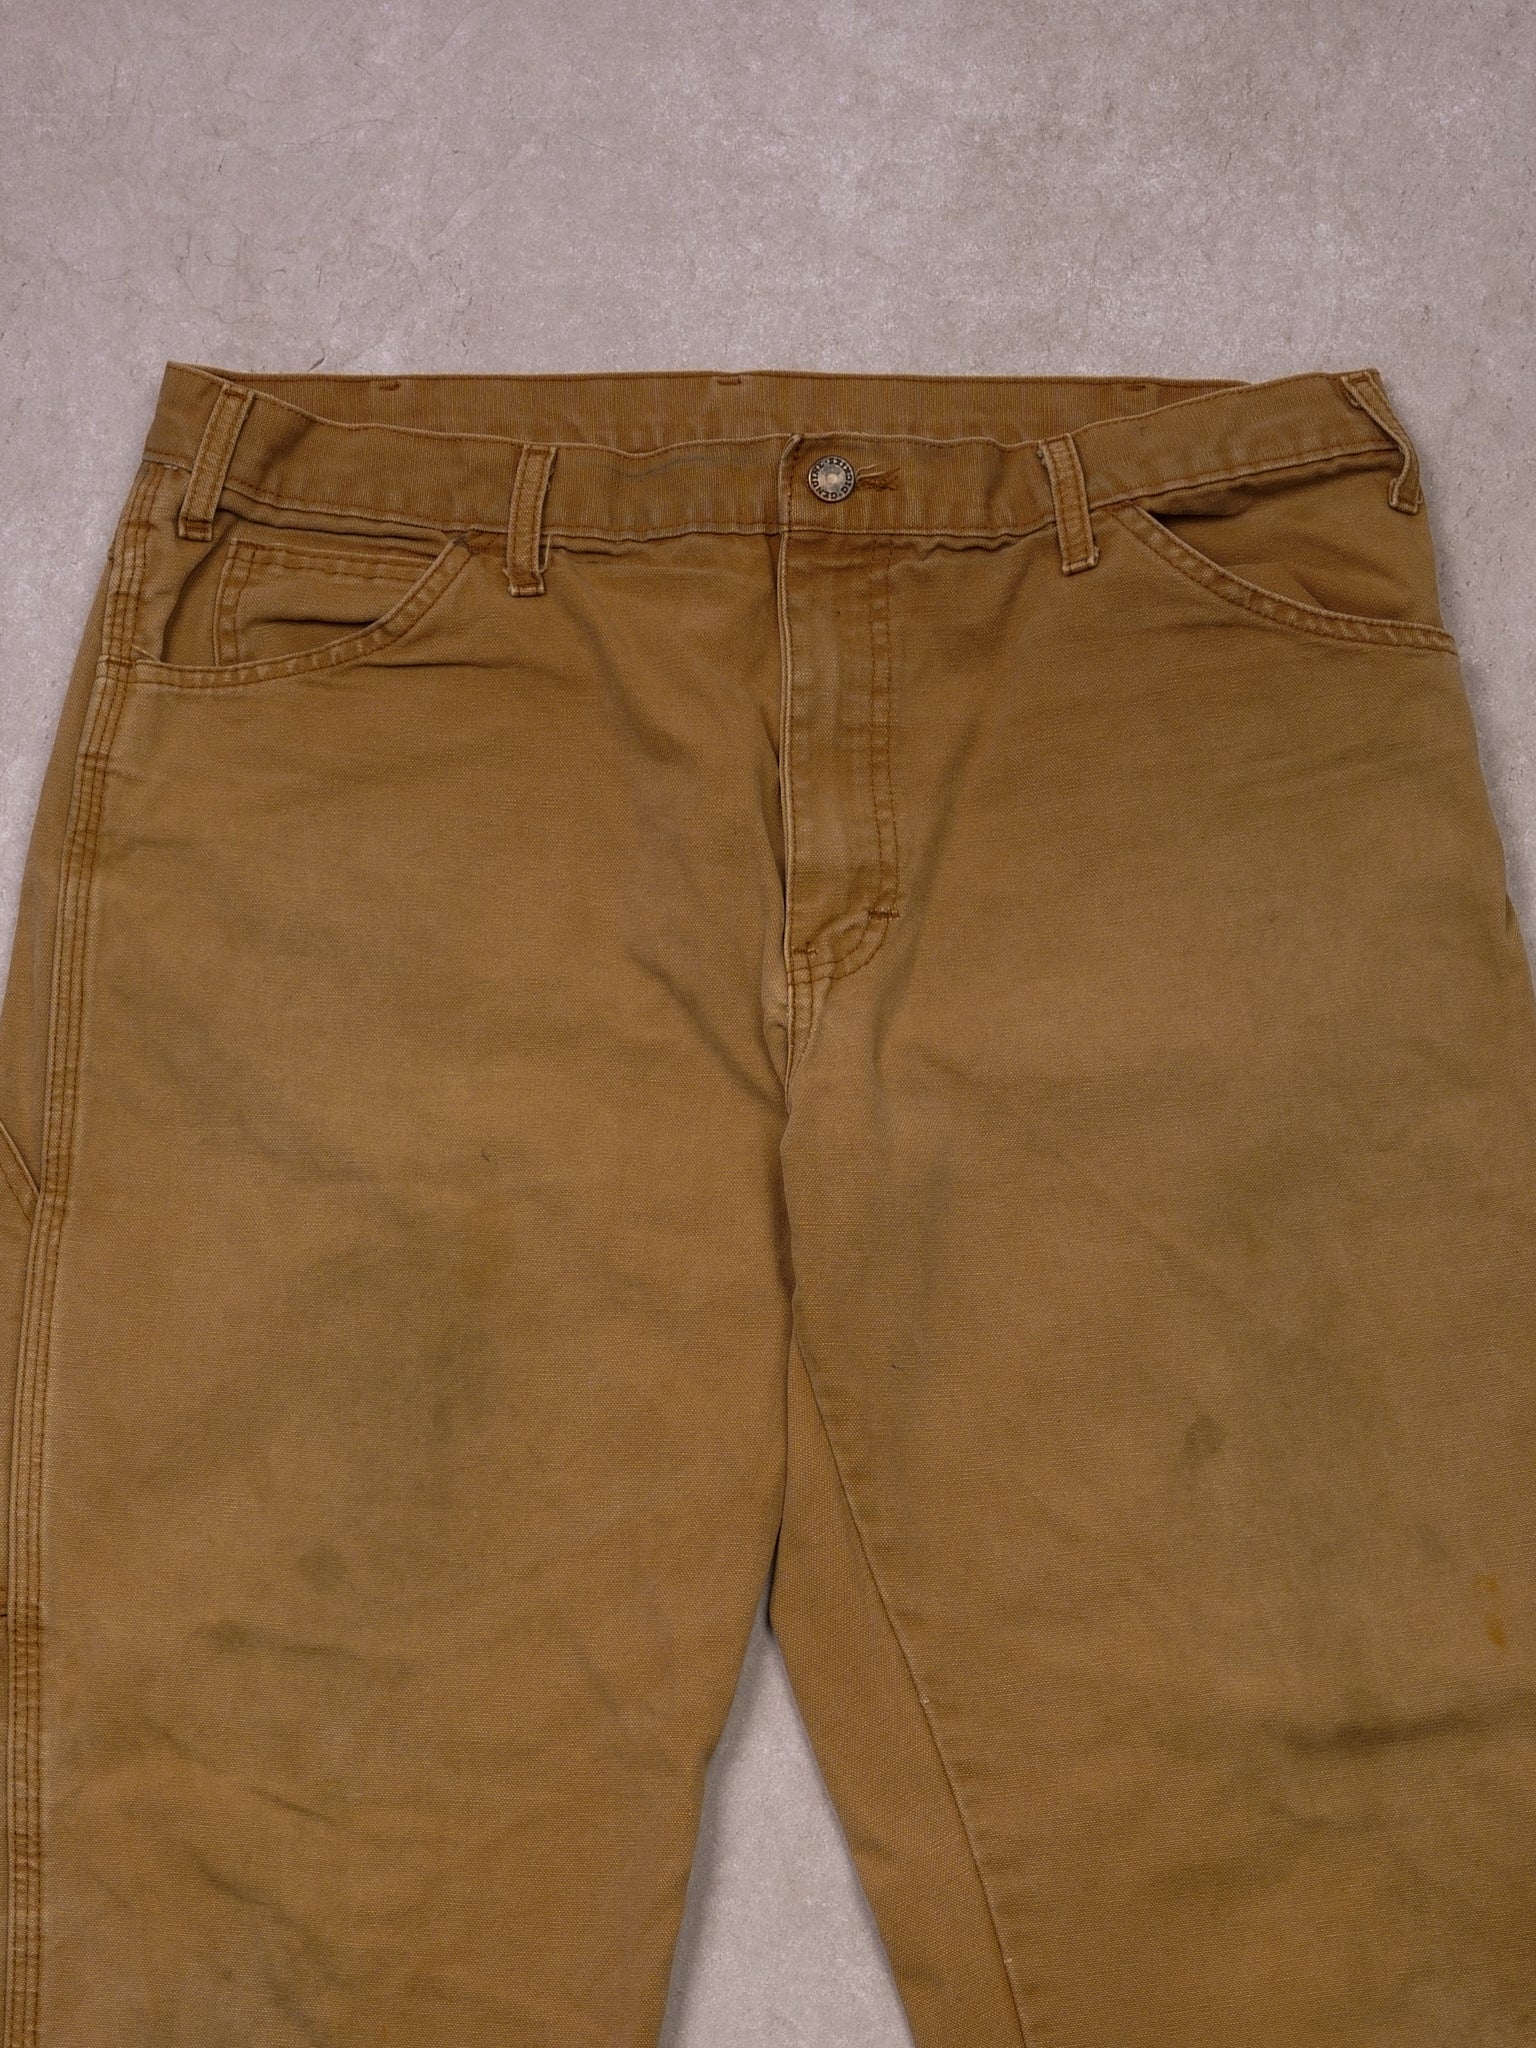 Vintage 90s Khaki Dickies Carpenter Pants (36x32)